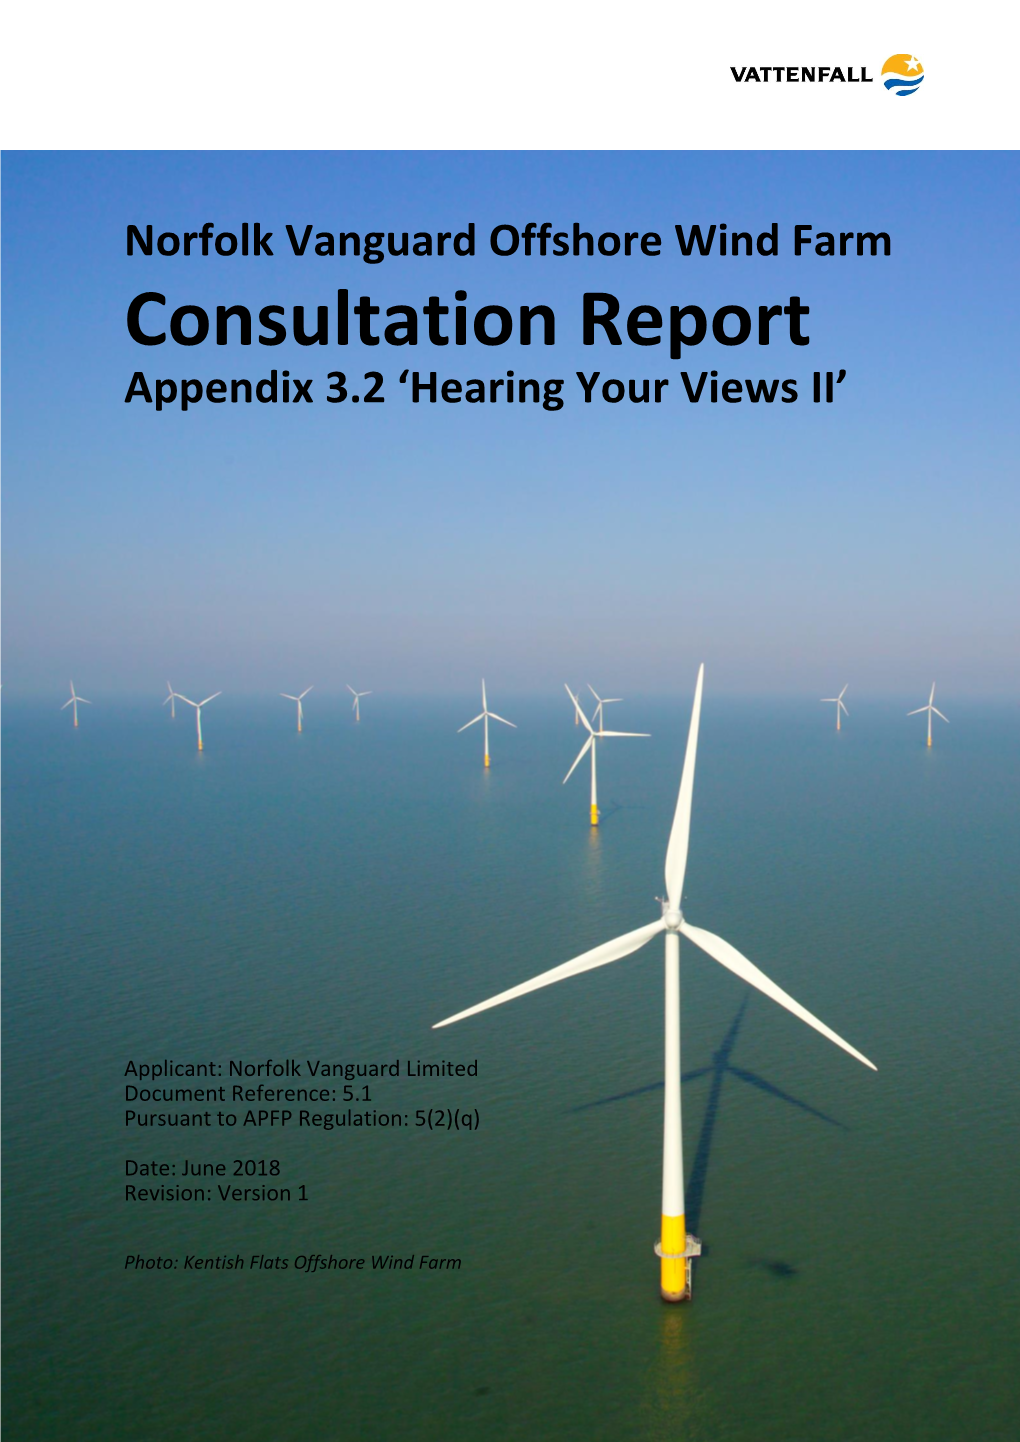 Norfolk Vanguard Offshore Wind Farm Consultation Report Appendix 3.2 ‘Hearing Your Views II’